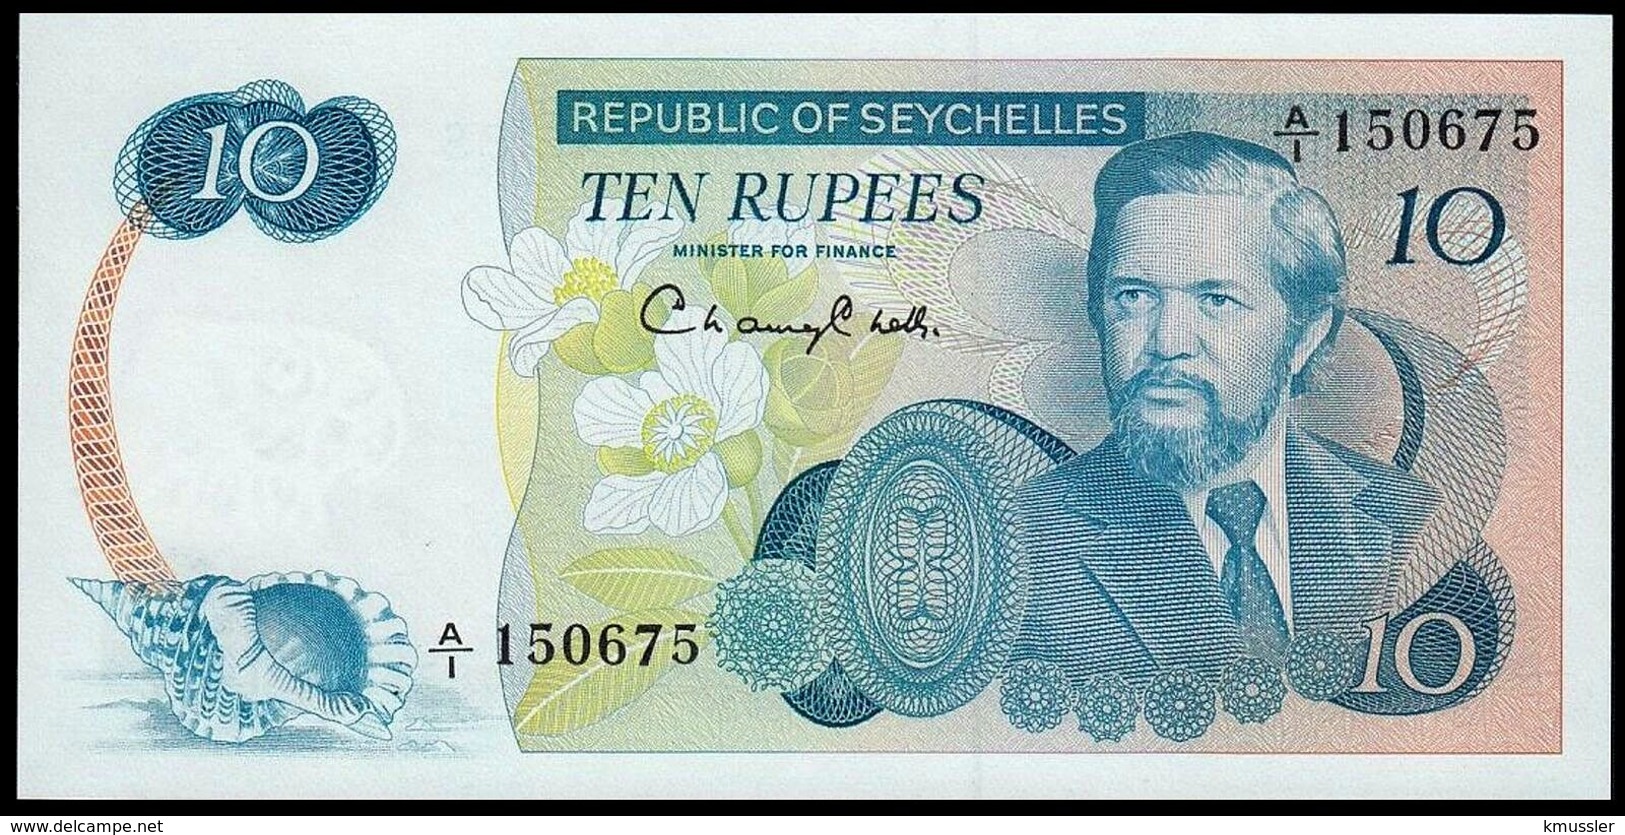 # # # Banknote Seychellen (Seychelles) 10 Rupees UNC # # # - Seychelles